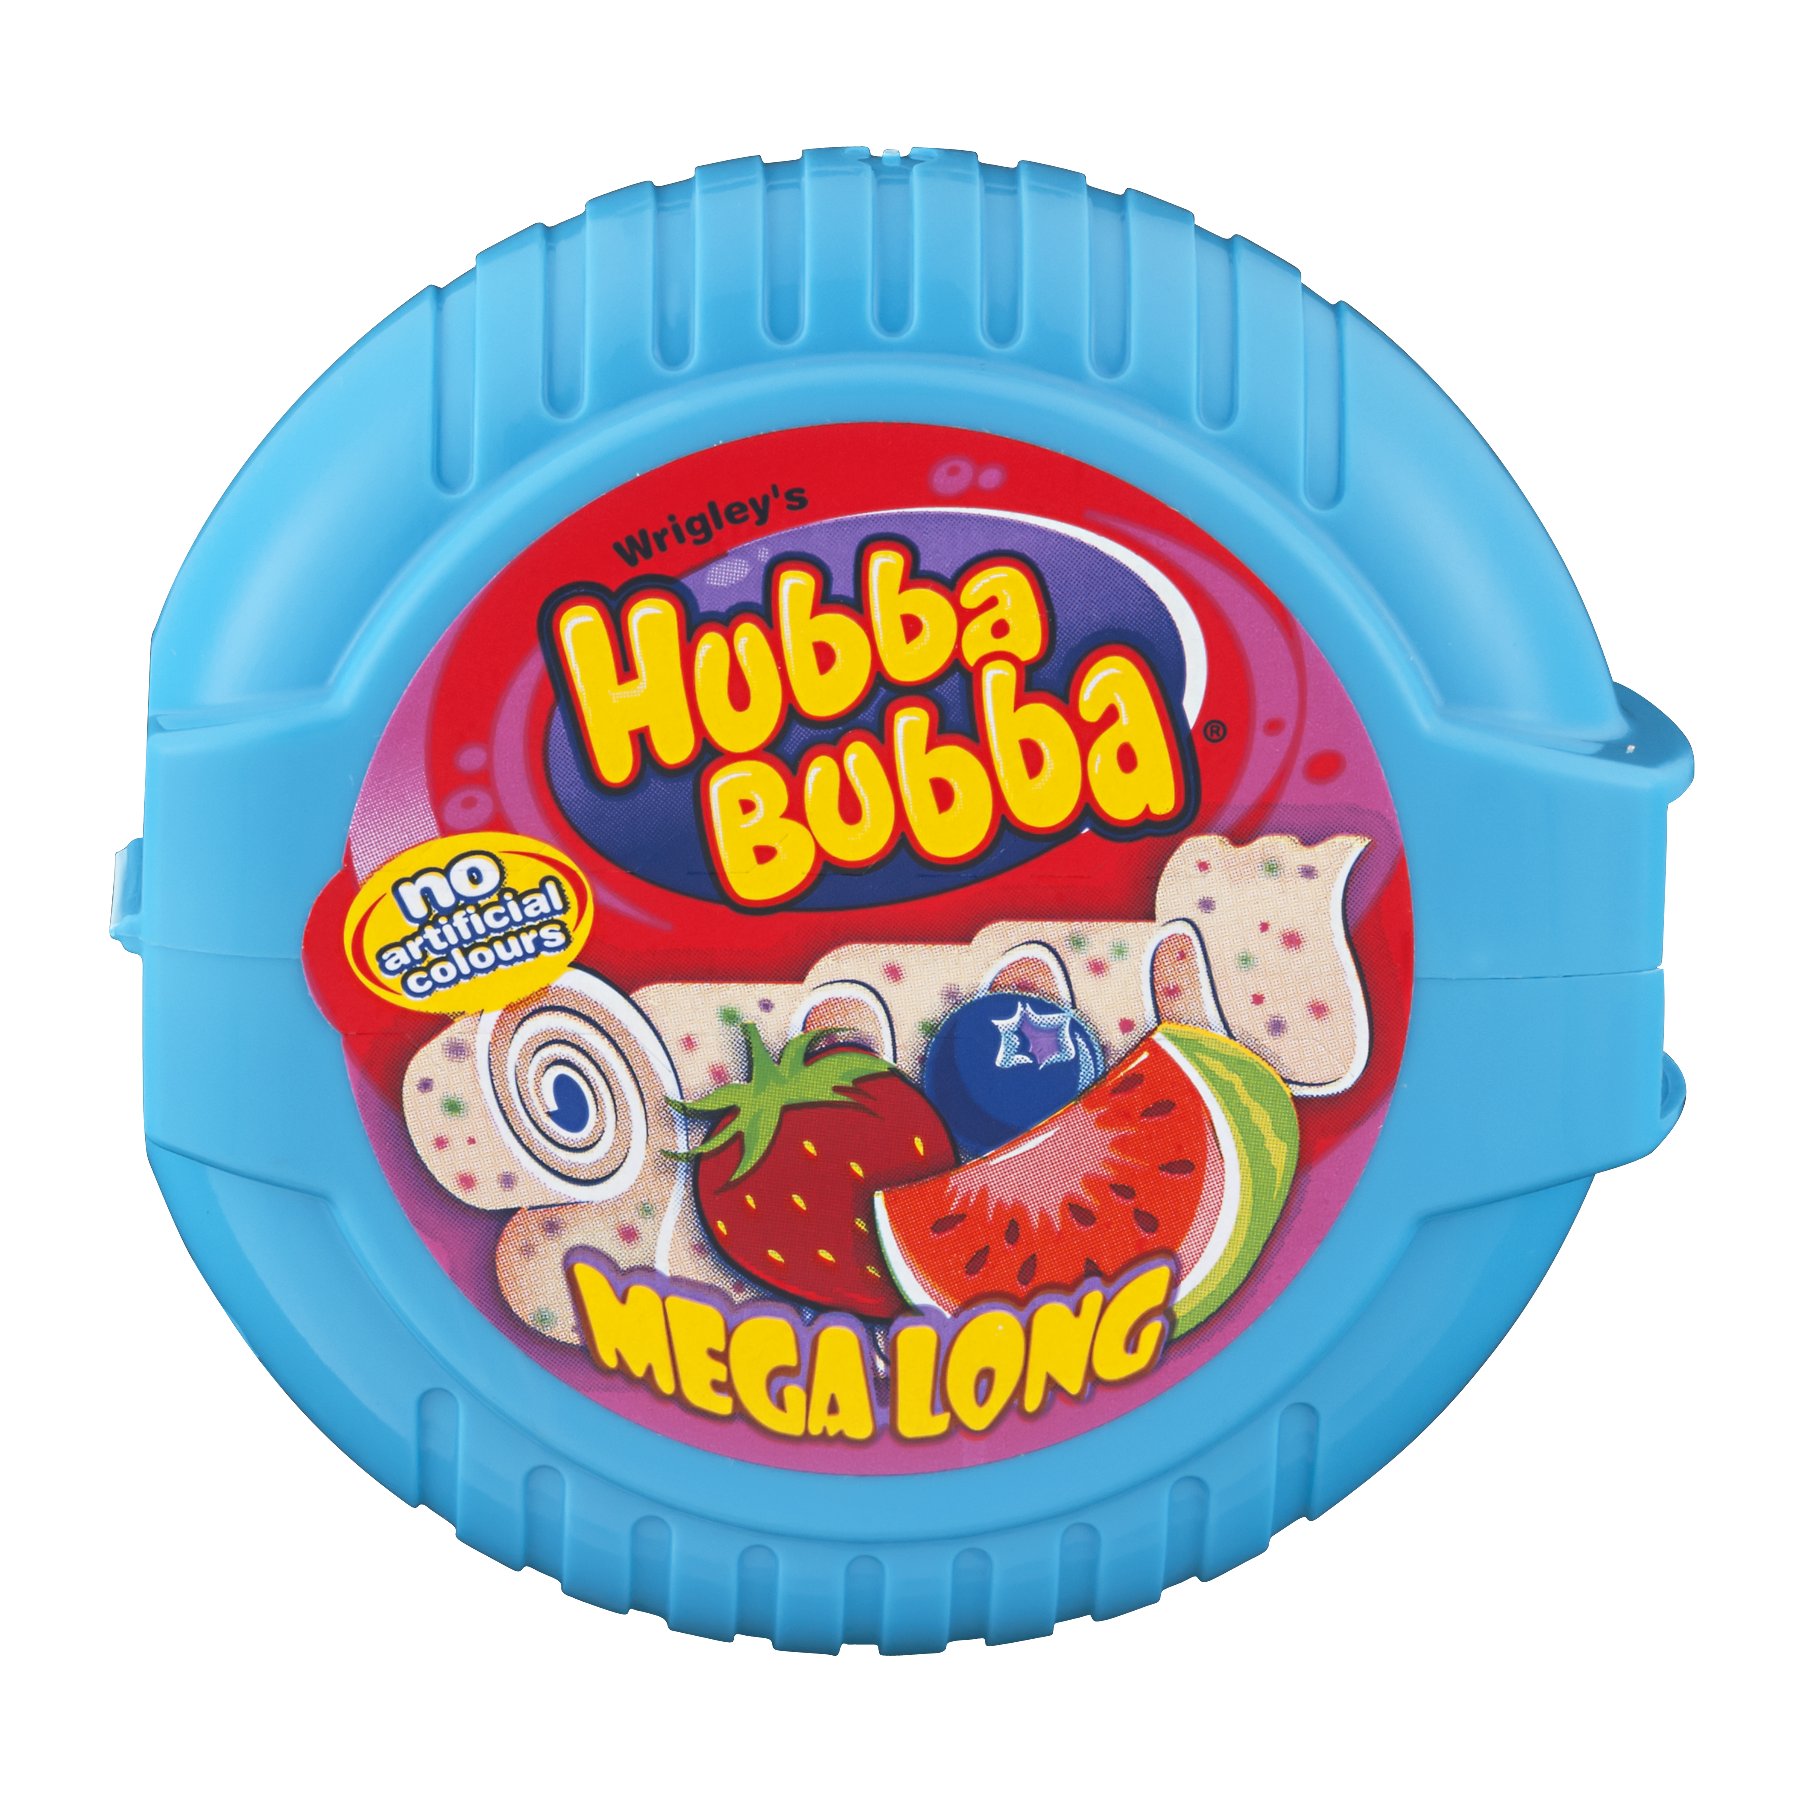 Hubba Bubba Kosher Mega Long Chewing Gum Triple Mix - Shop Snacks